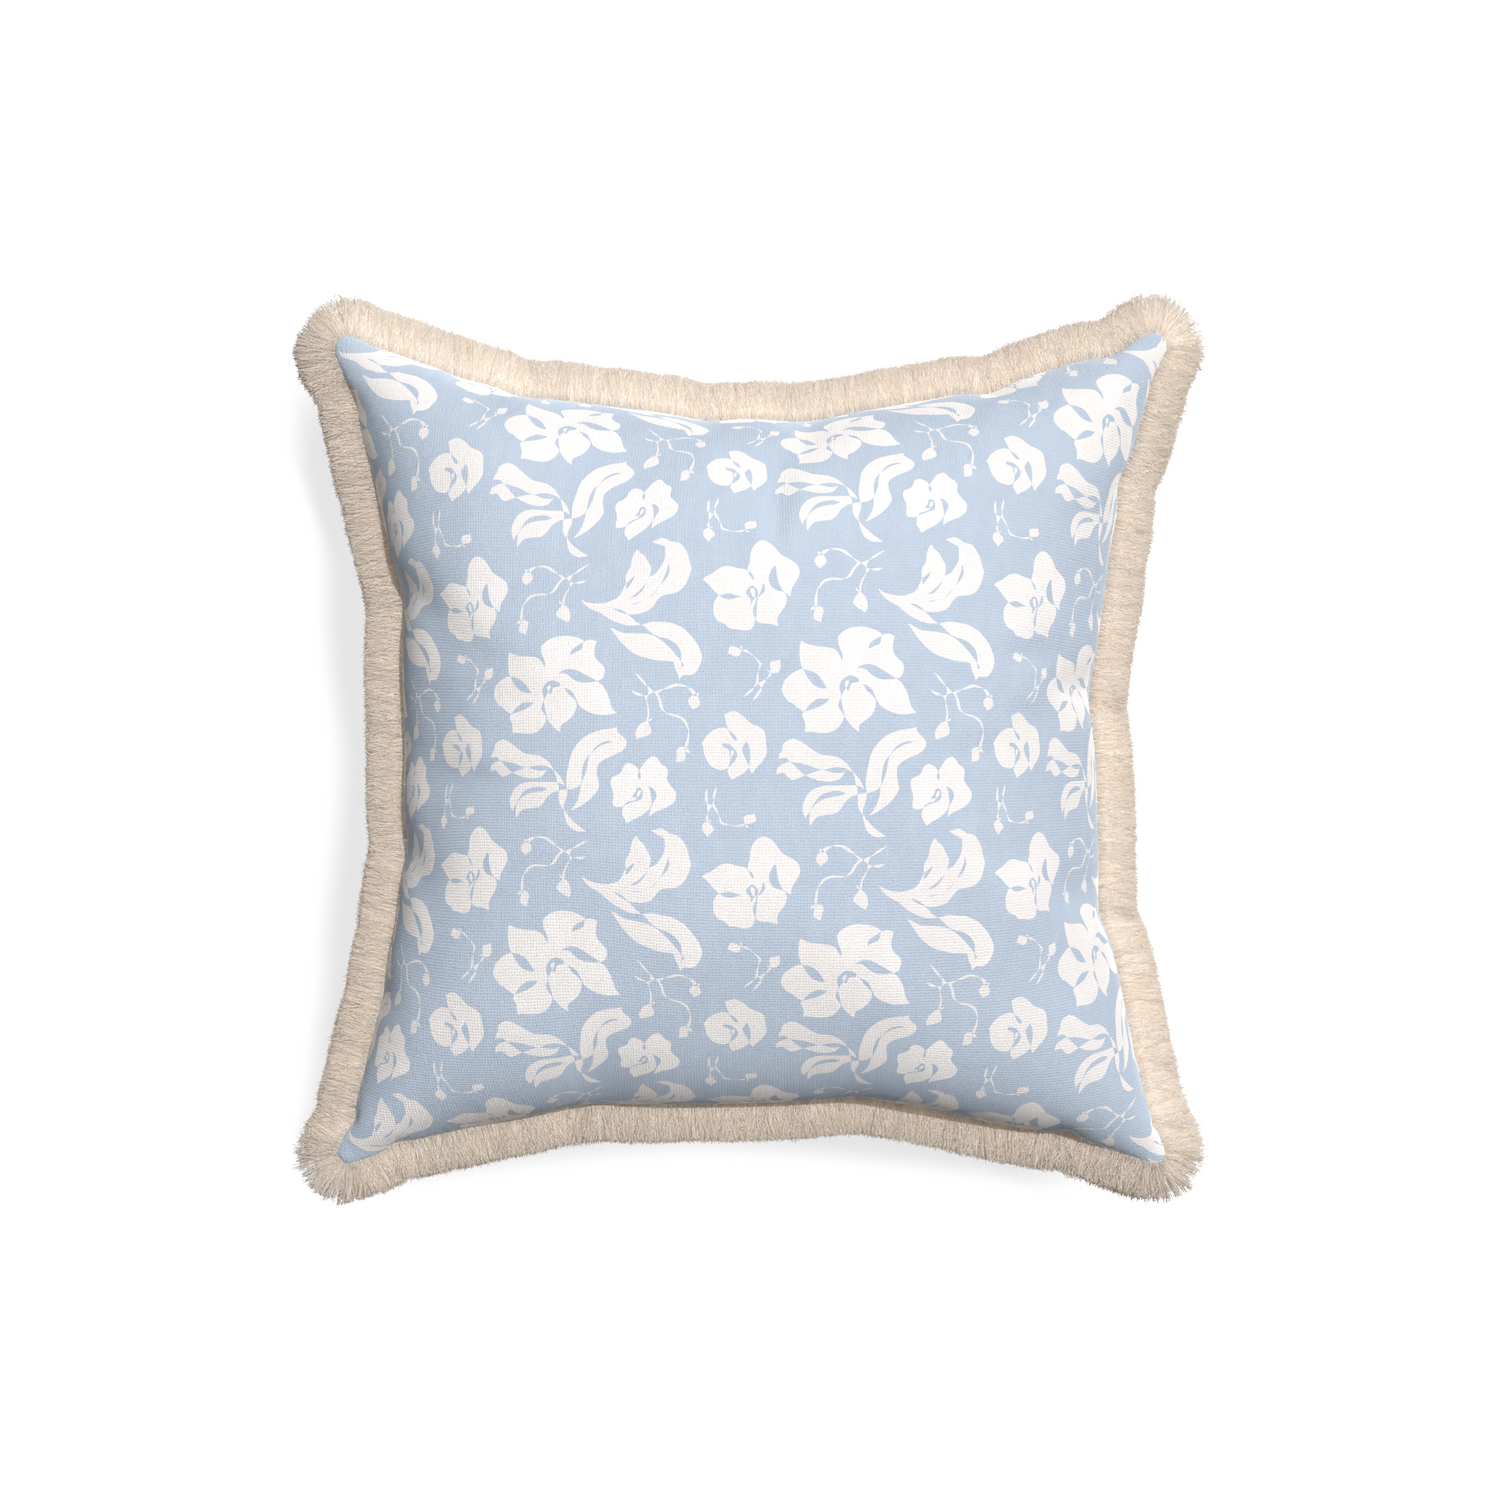 18-square georgia custom pillow with cream fringe on white background